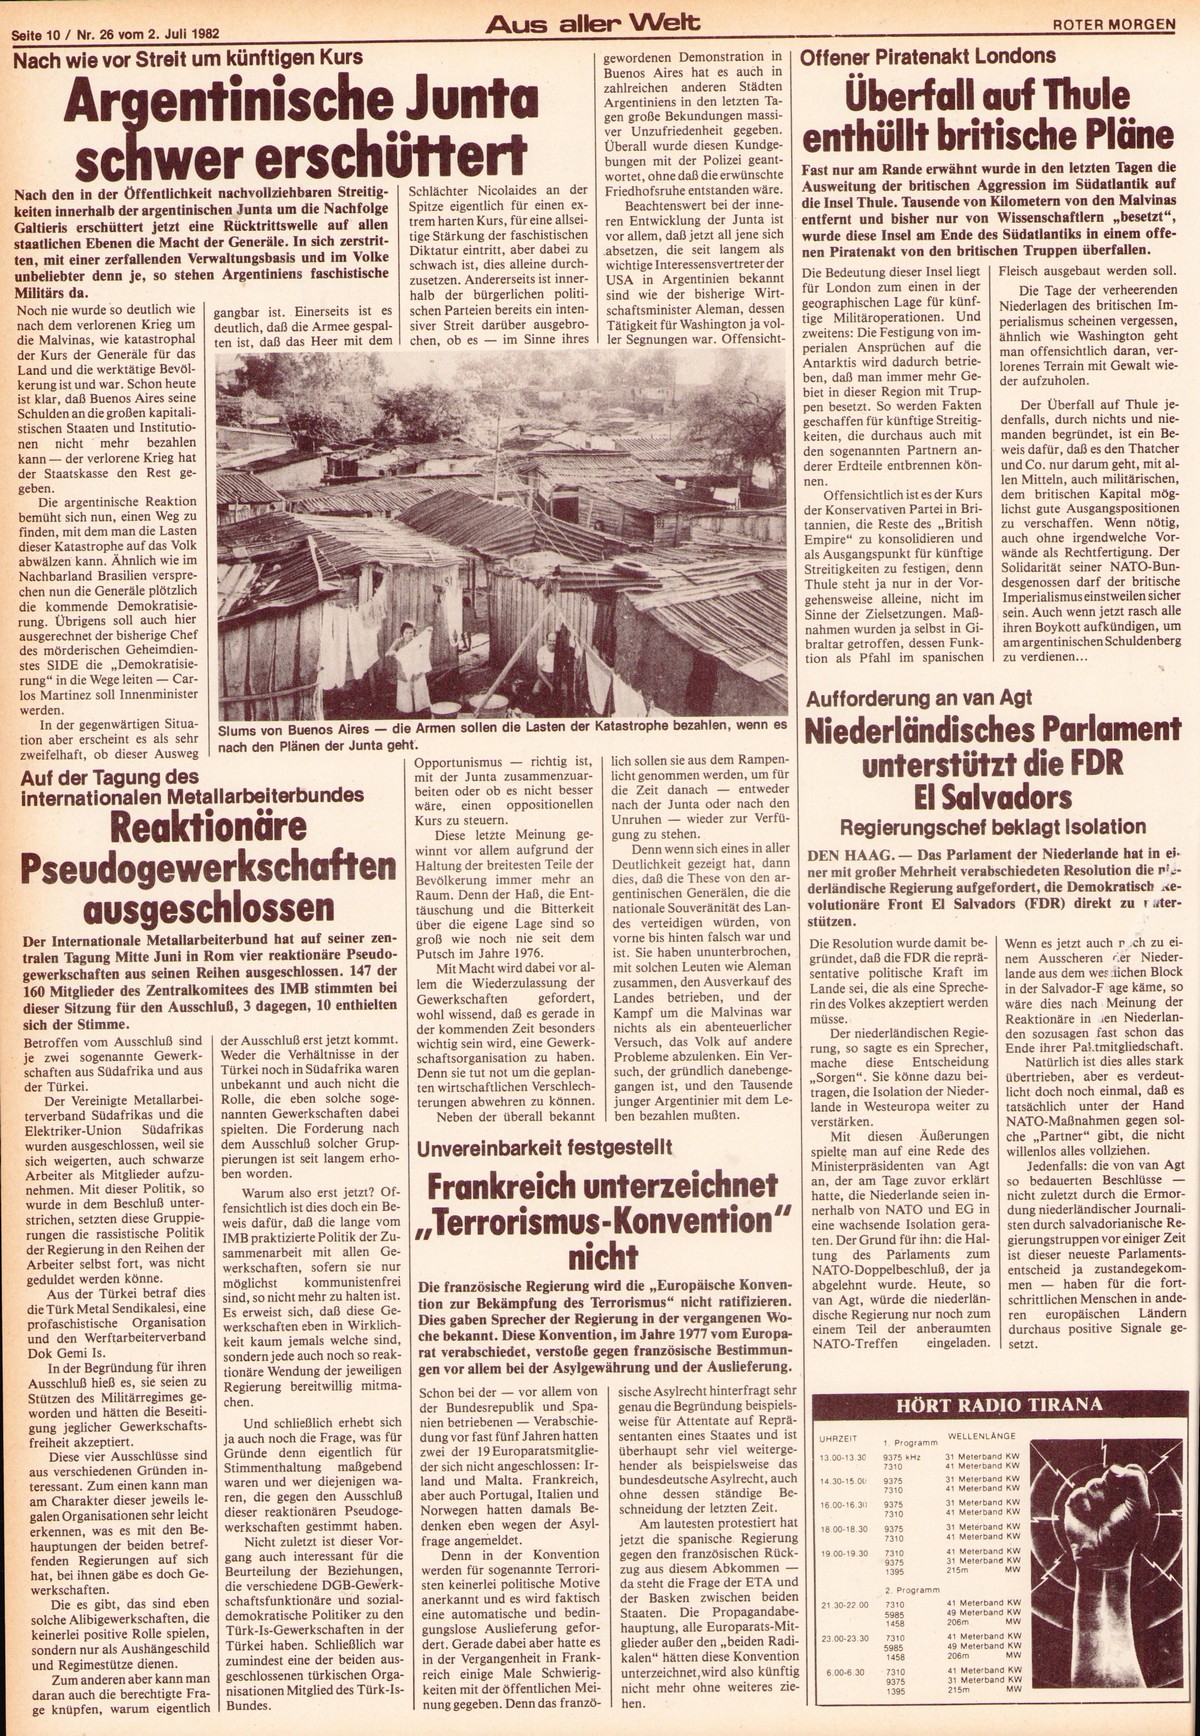 Roter Morgen, 16. Jg., 2. Juli 1982, Nr. 26, Seite 10